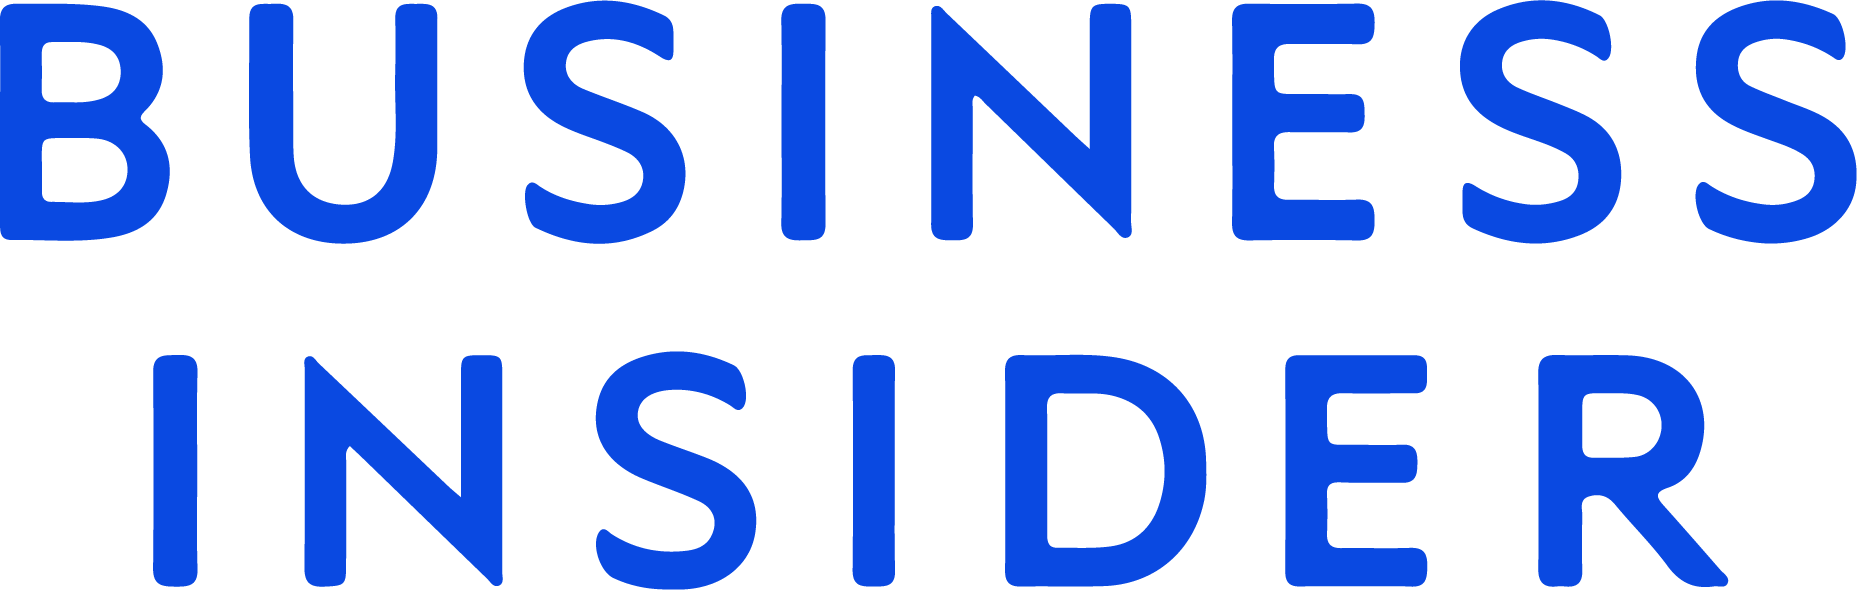 Business-Insider-Logo-blue